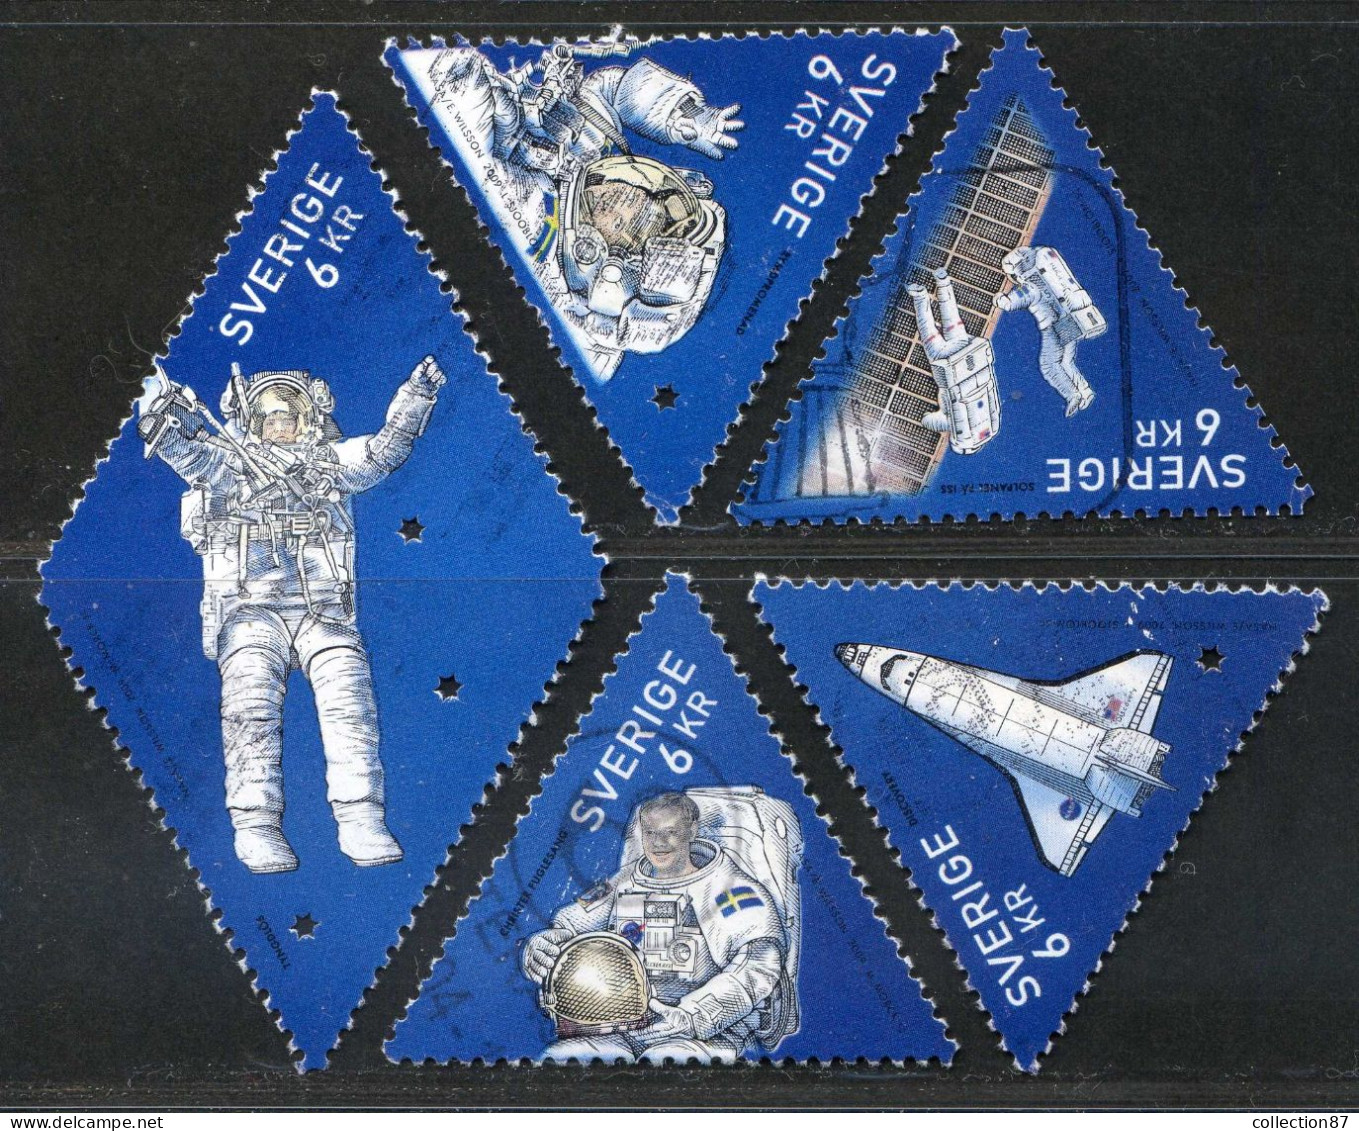 Réf 77 < SUEDE < Yvert N° 2696 à 2700 Ø < Année 2009 Used SWEDEN < Espace Christer Fuglesang Premier Astronaute Suédois - Gebruikt